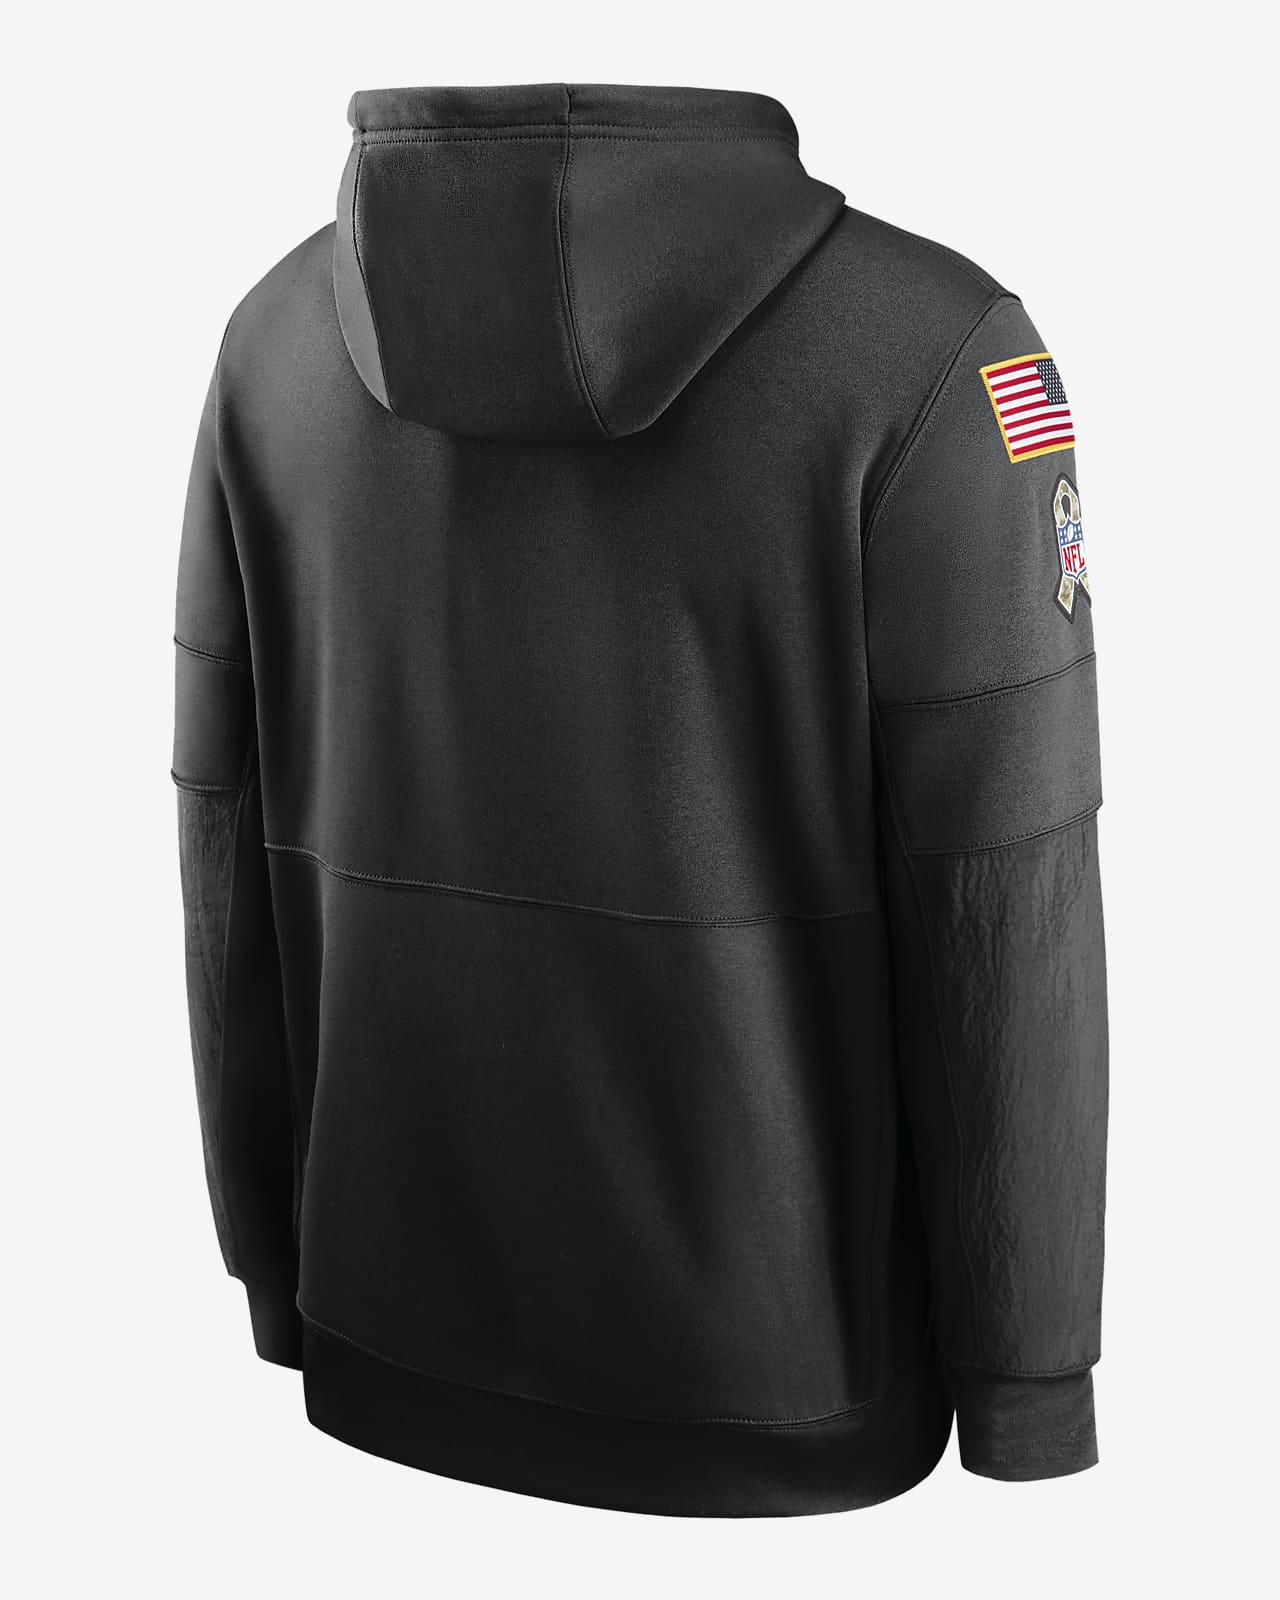 salute to the troops nfl hoodies